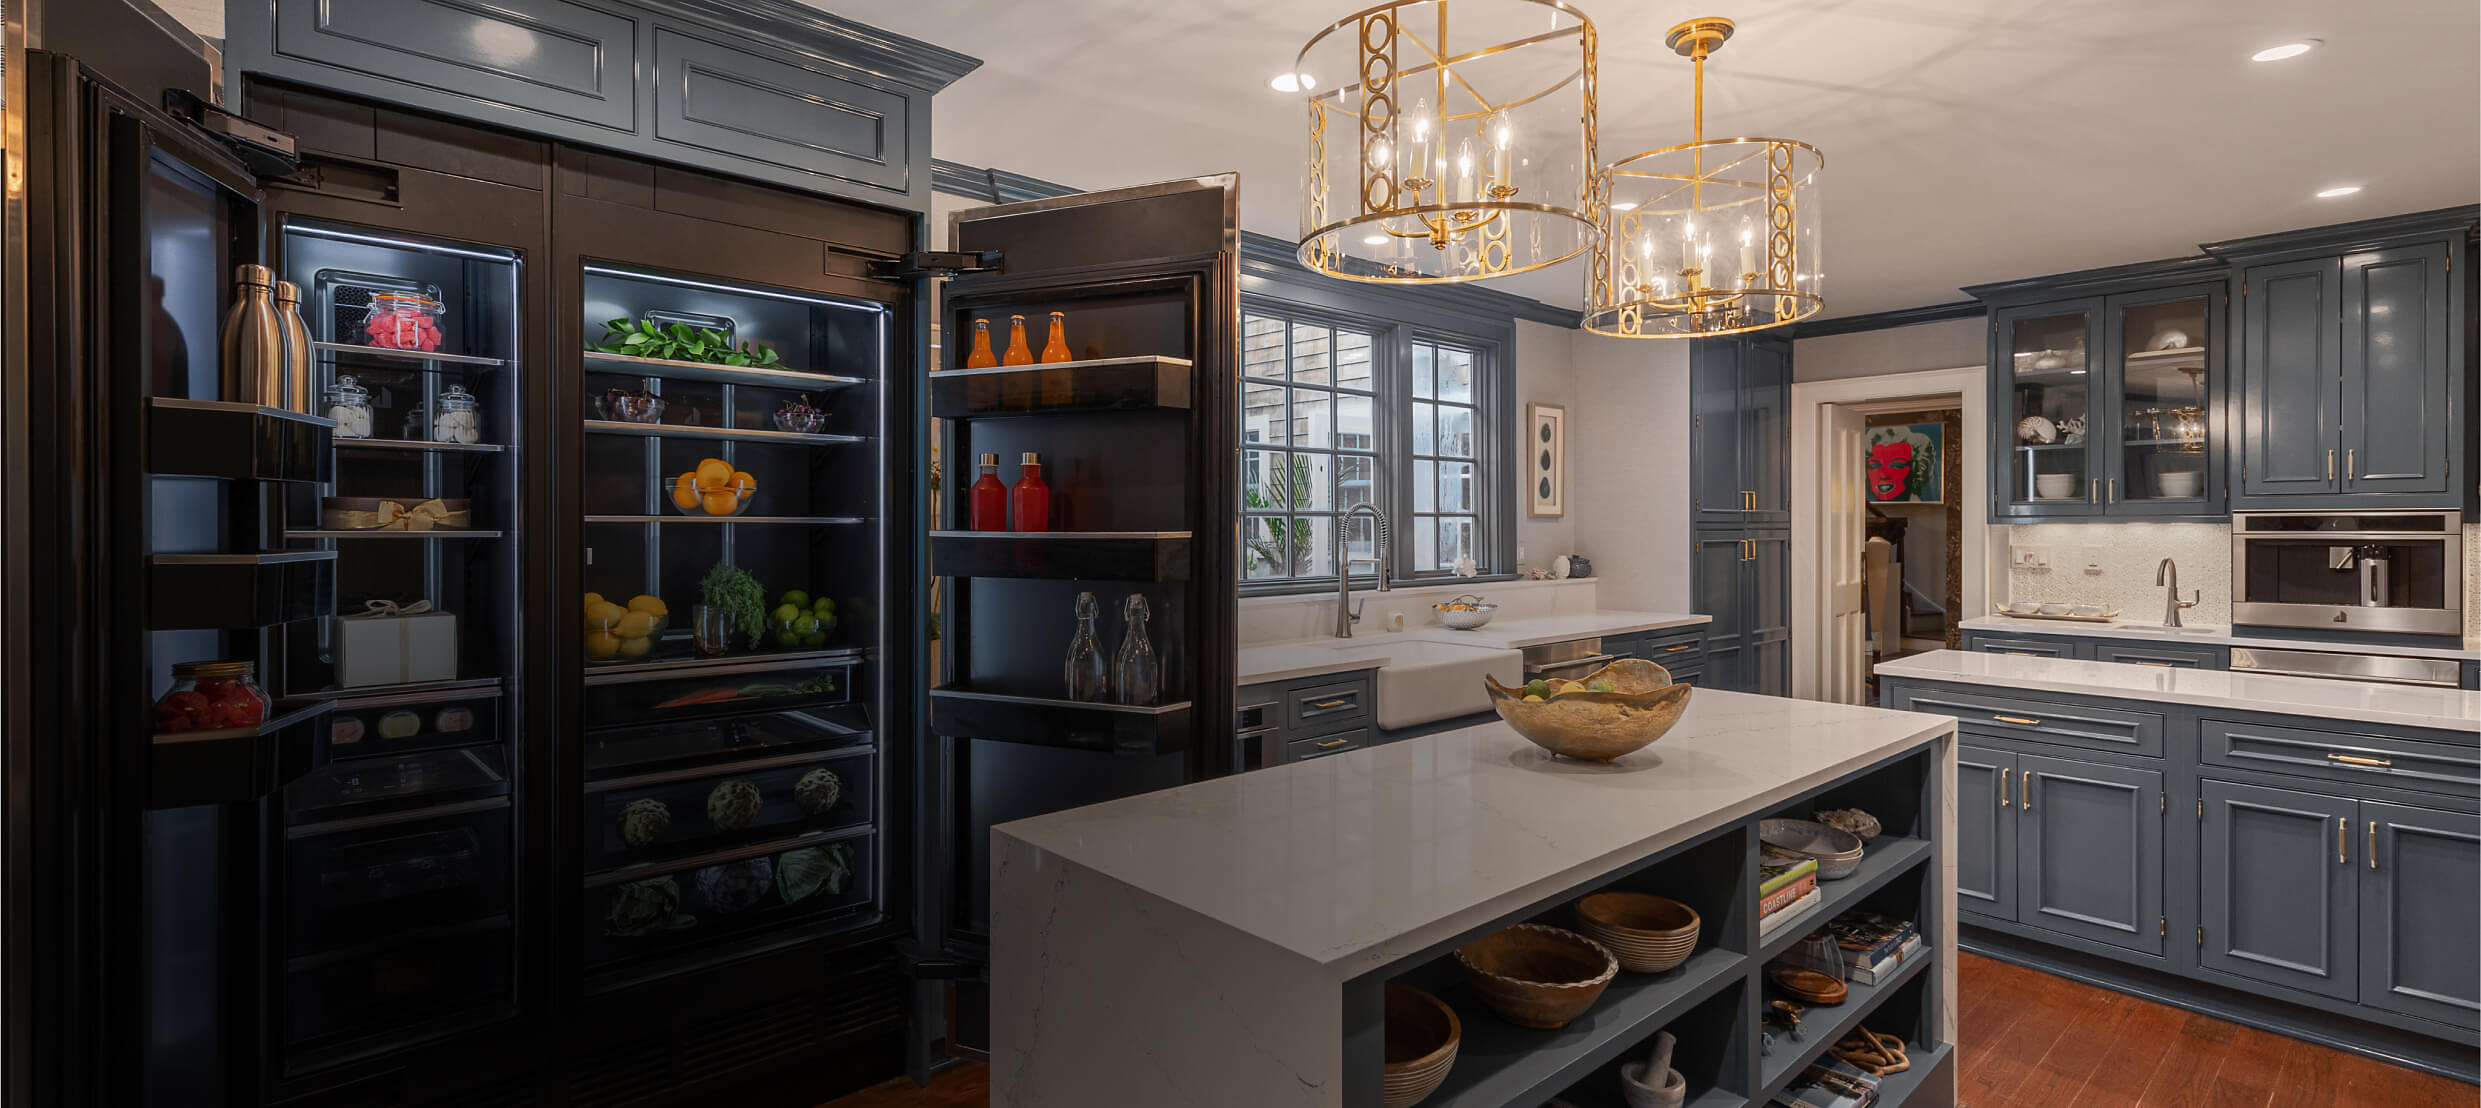 A beautiful blue kitchen with JennAir® appliances.